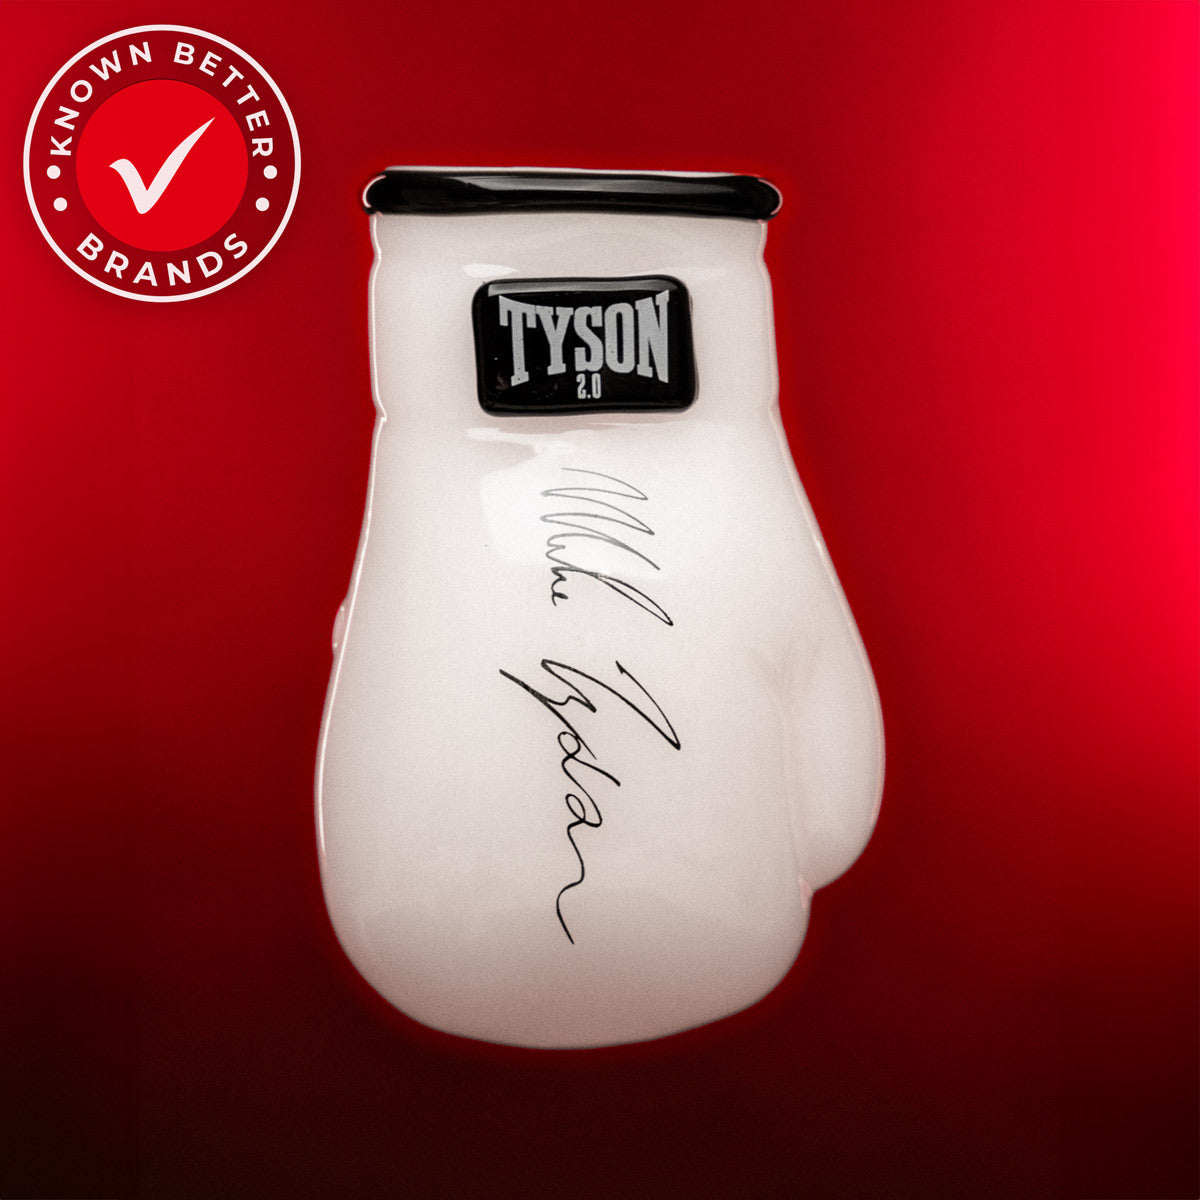 TYSON 2.0 White and Black Boxing Glove Hand Pipe - Empire Glassworks Collaboration